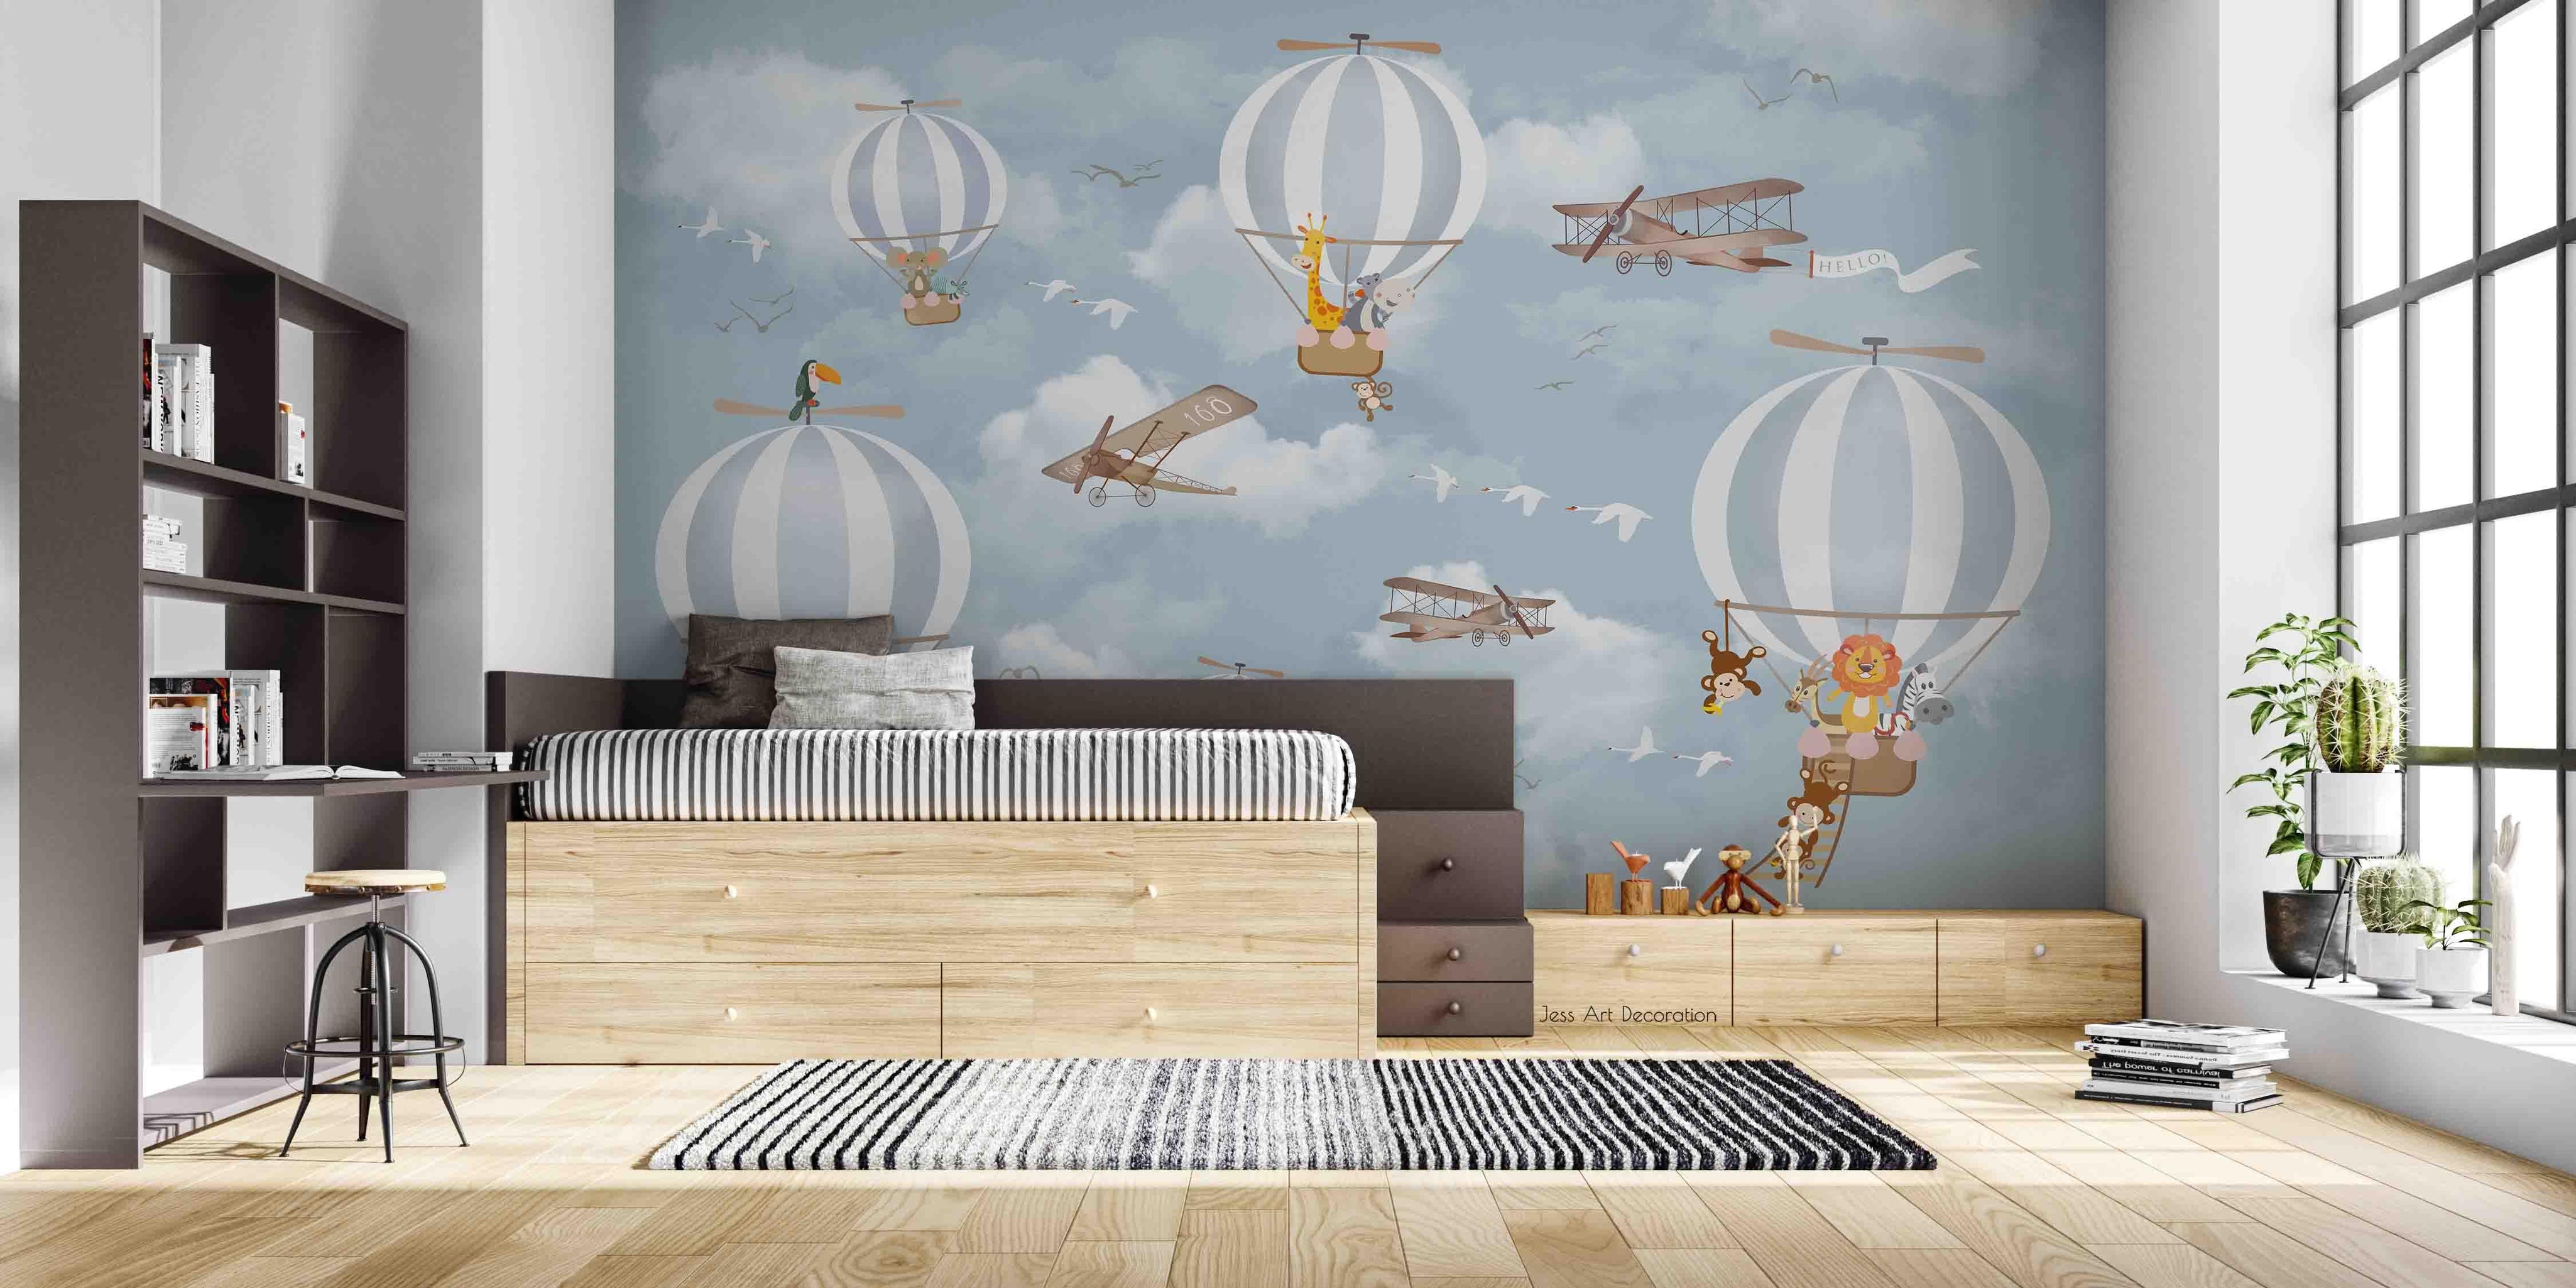 3D Hot Air Balloon Retro Airplane Animal Wall Mural Wallpaper GD 2817- Jess Art Decoration